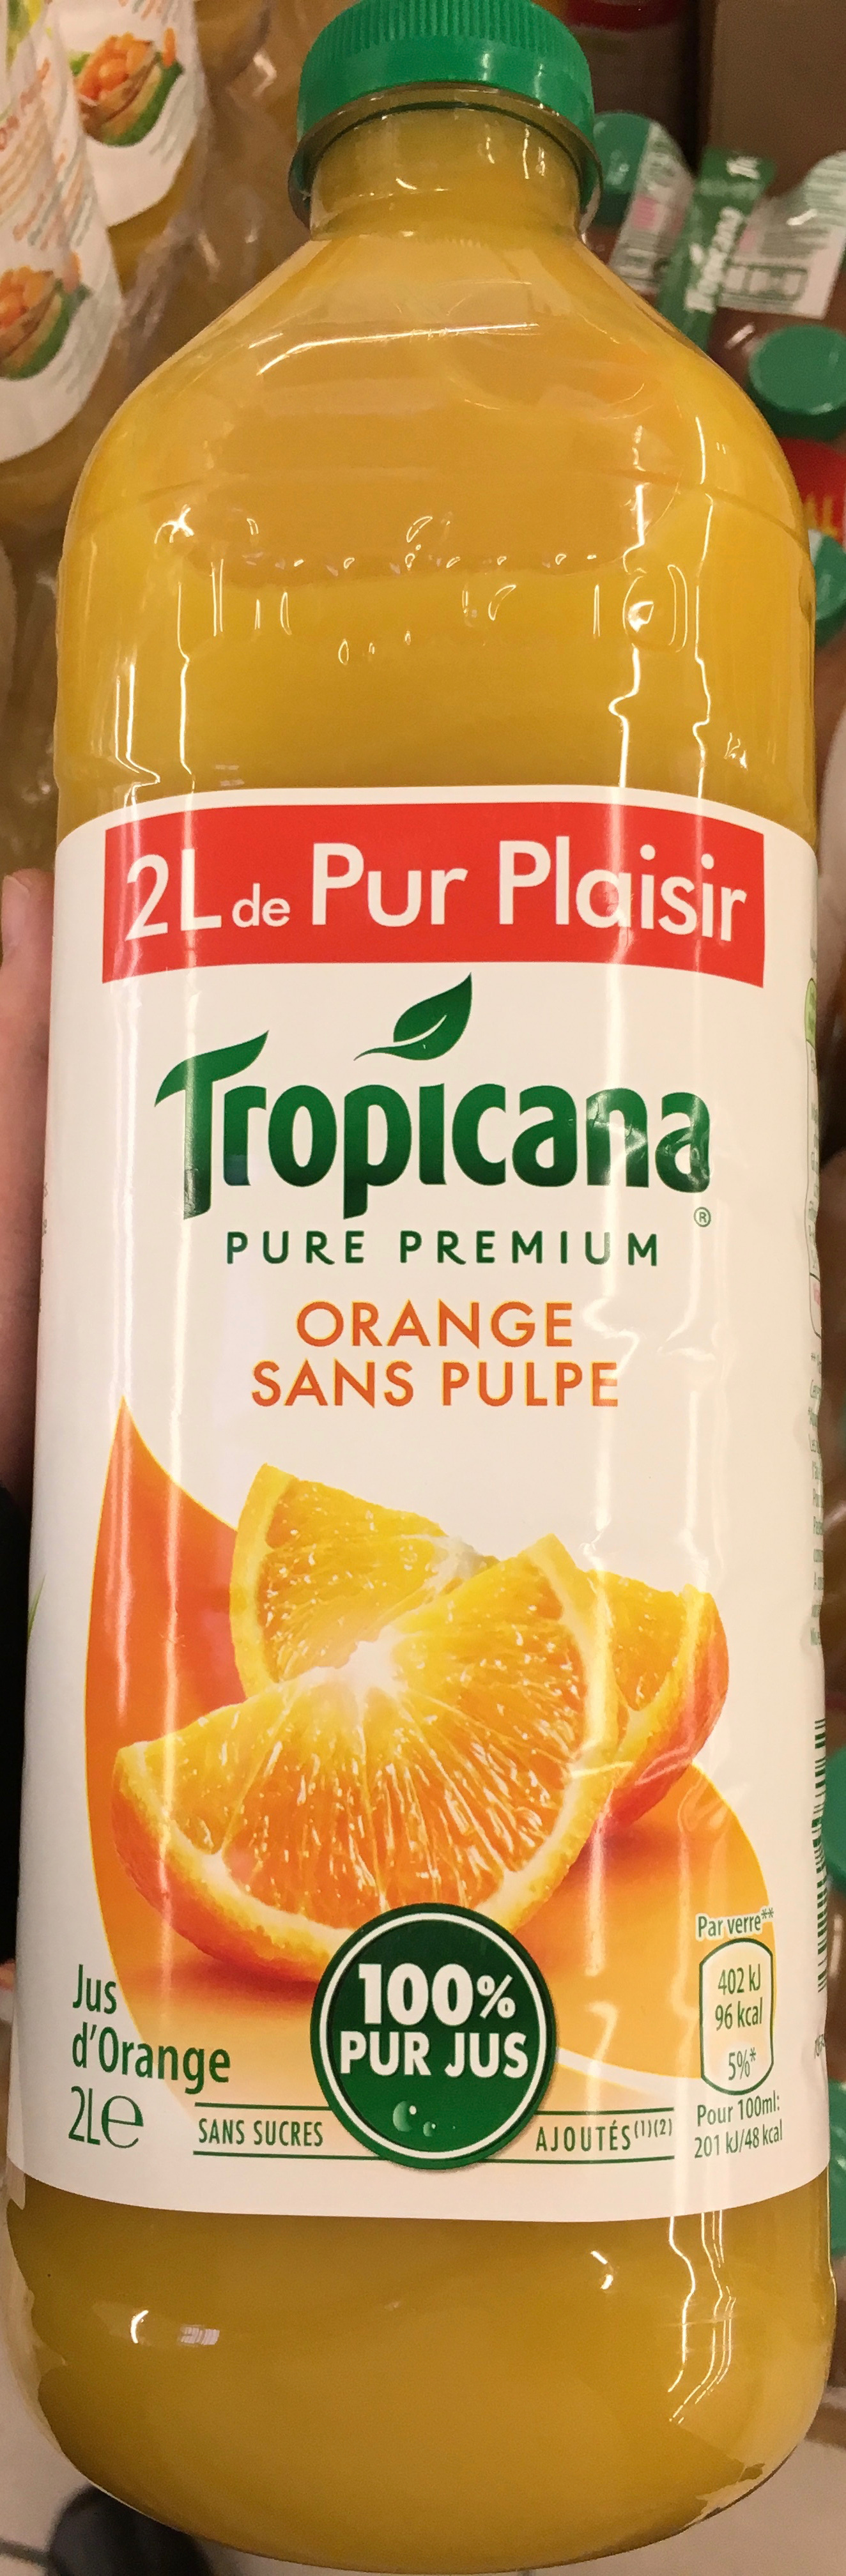 Pure Premium Orange sans pulpe - Product - fr